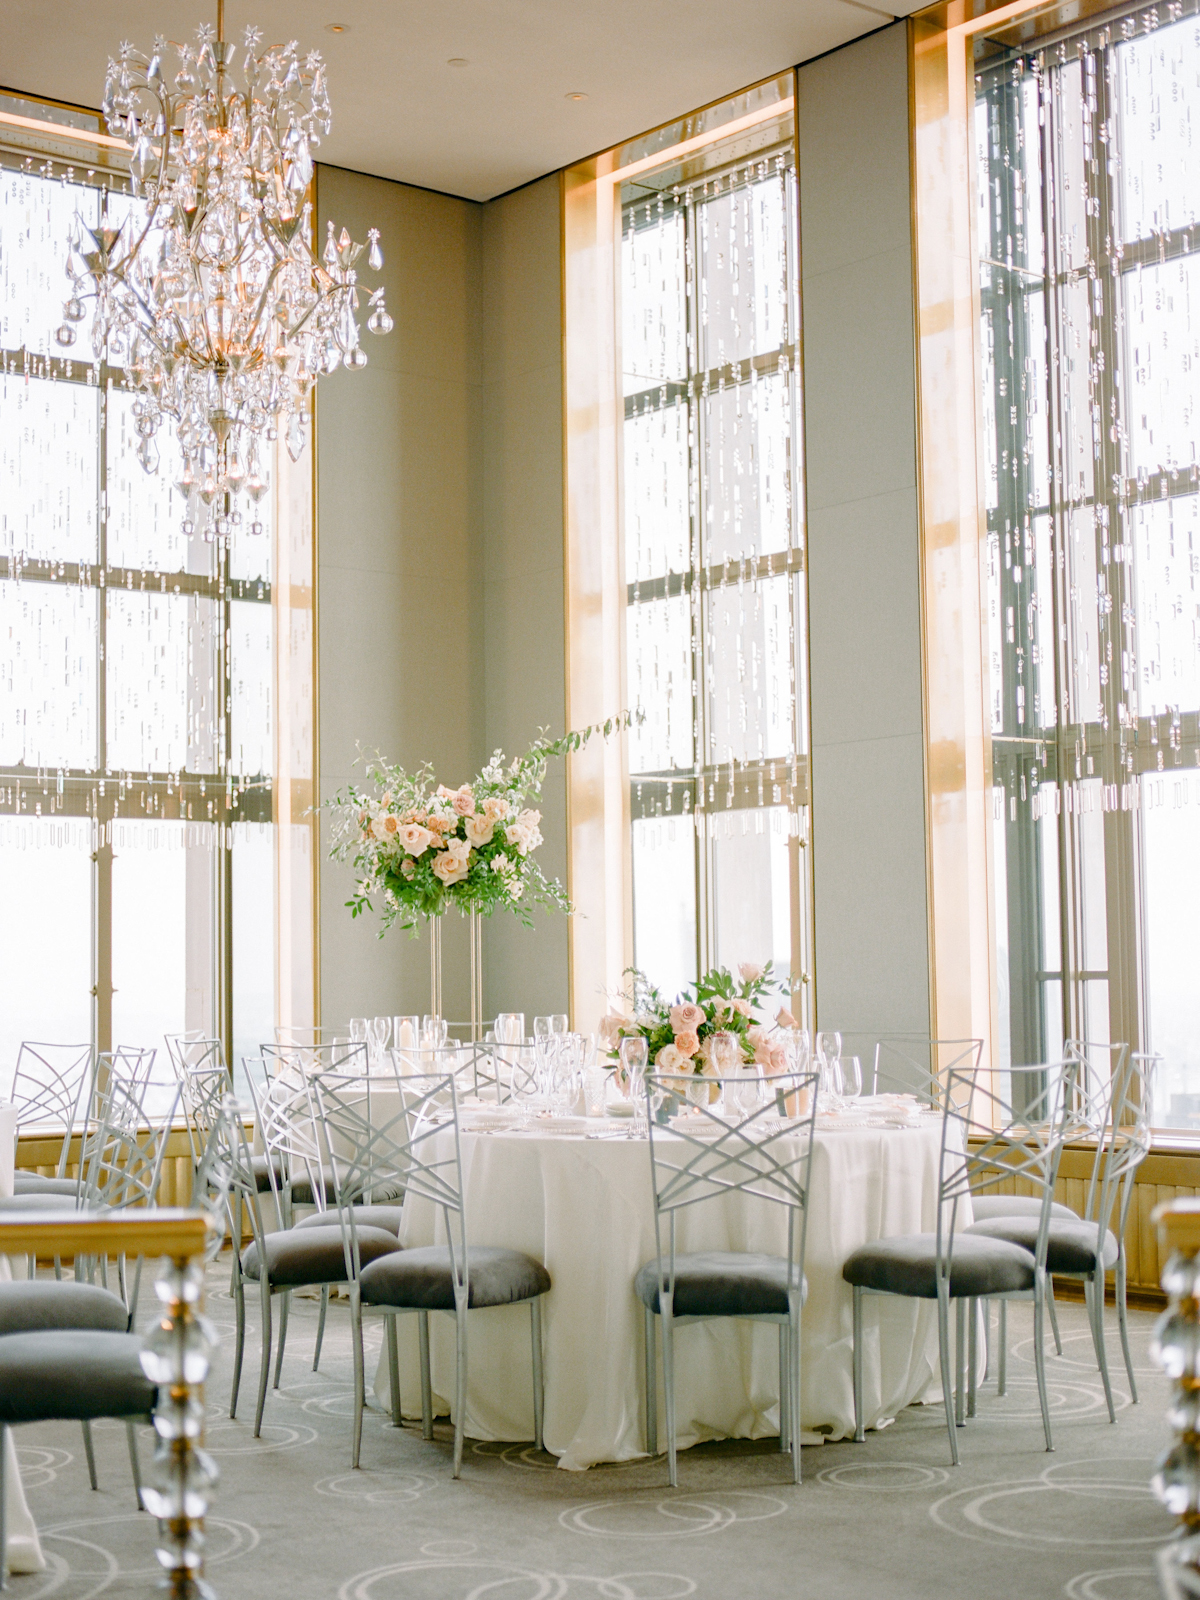 Rainbow Room wedding chandelier and flowers